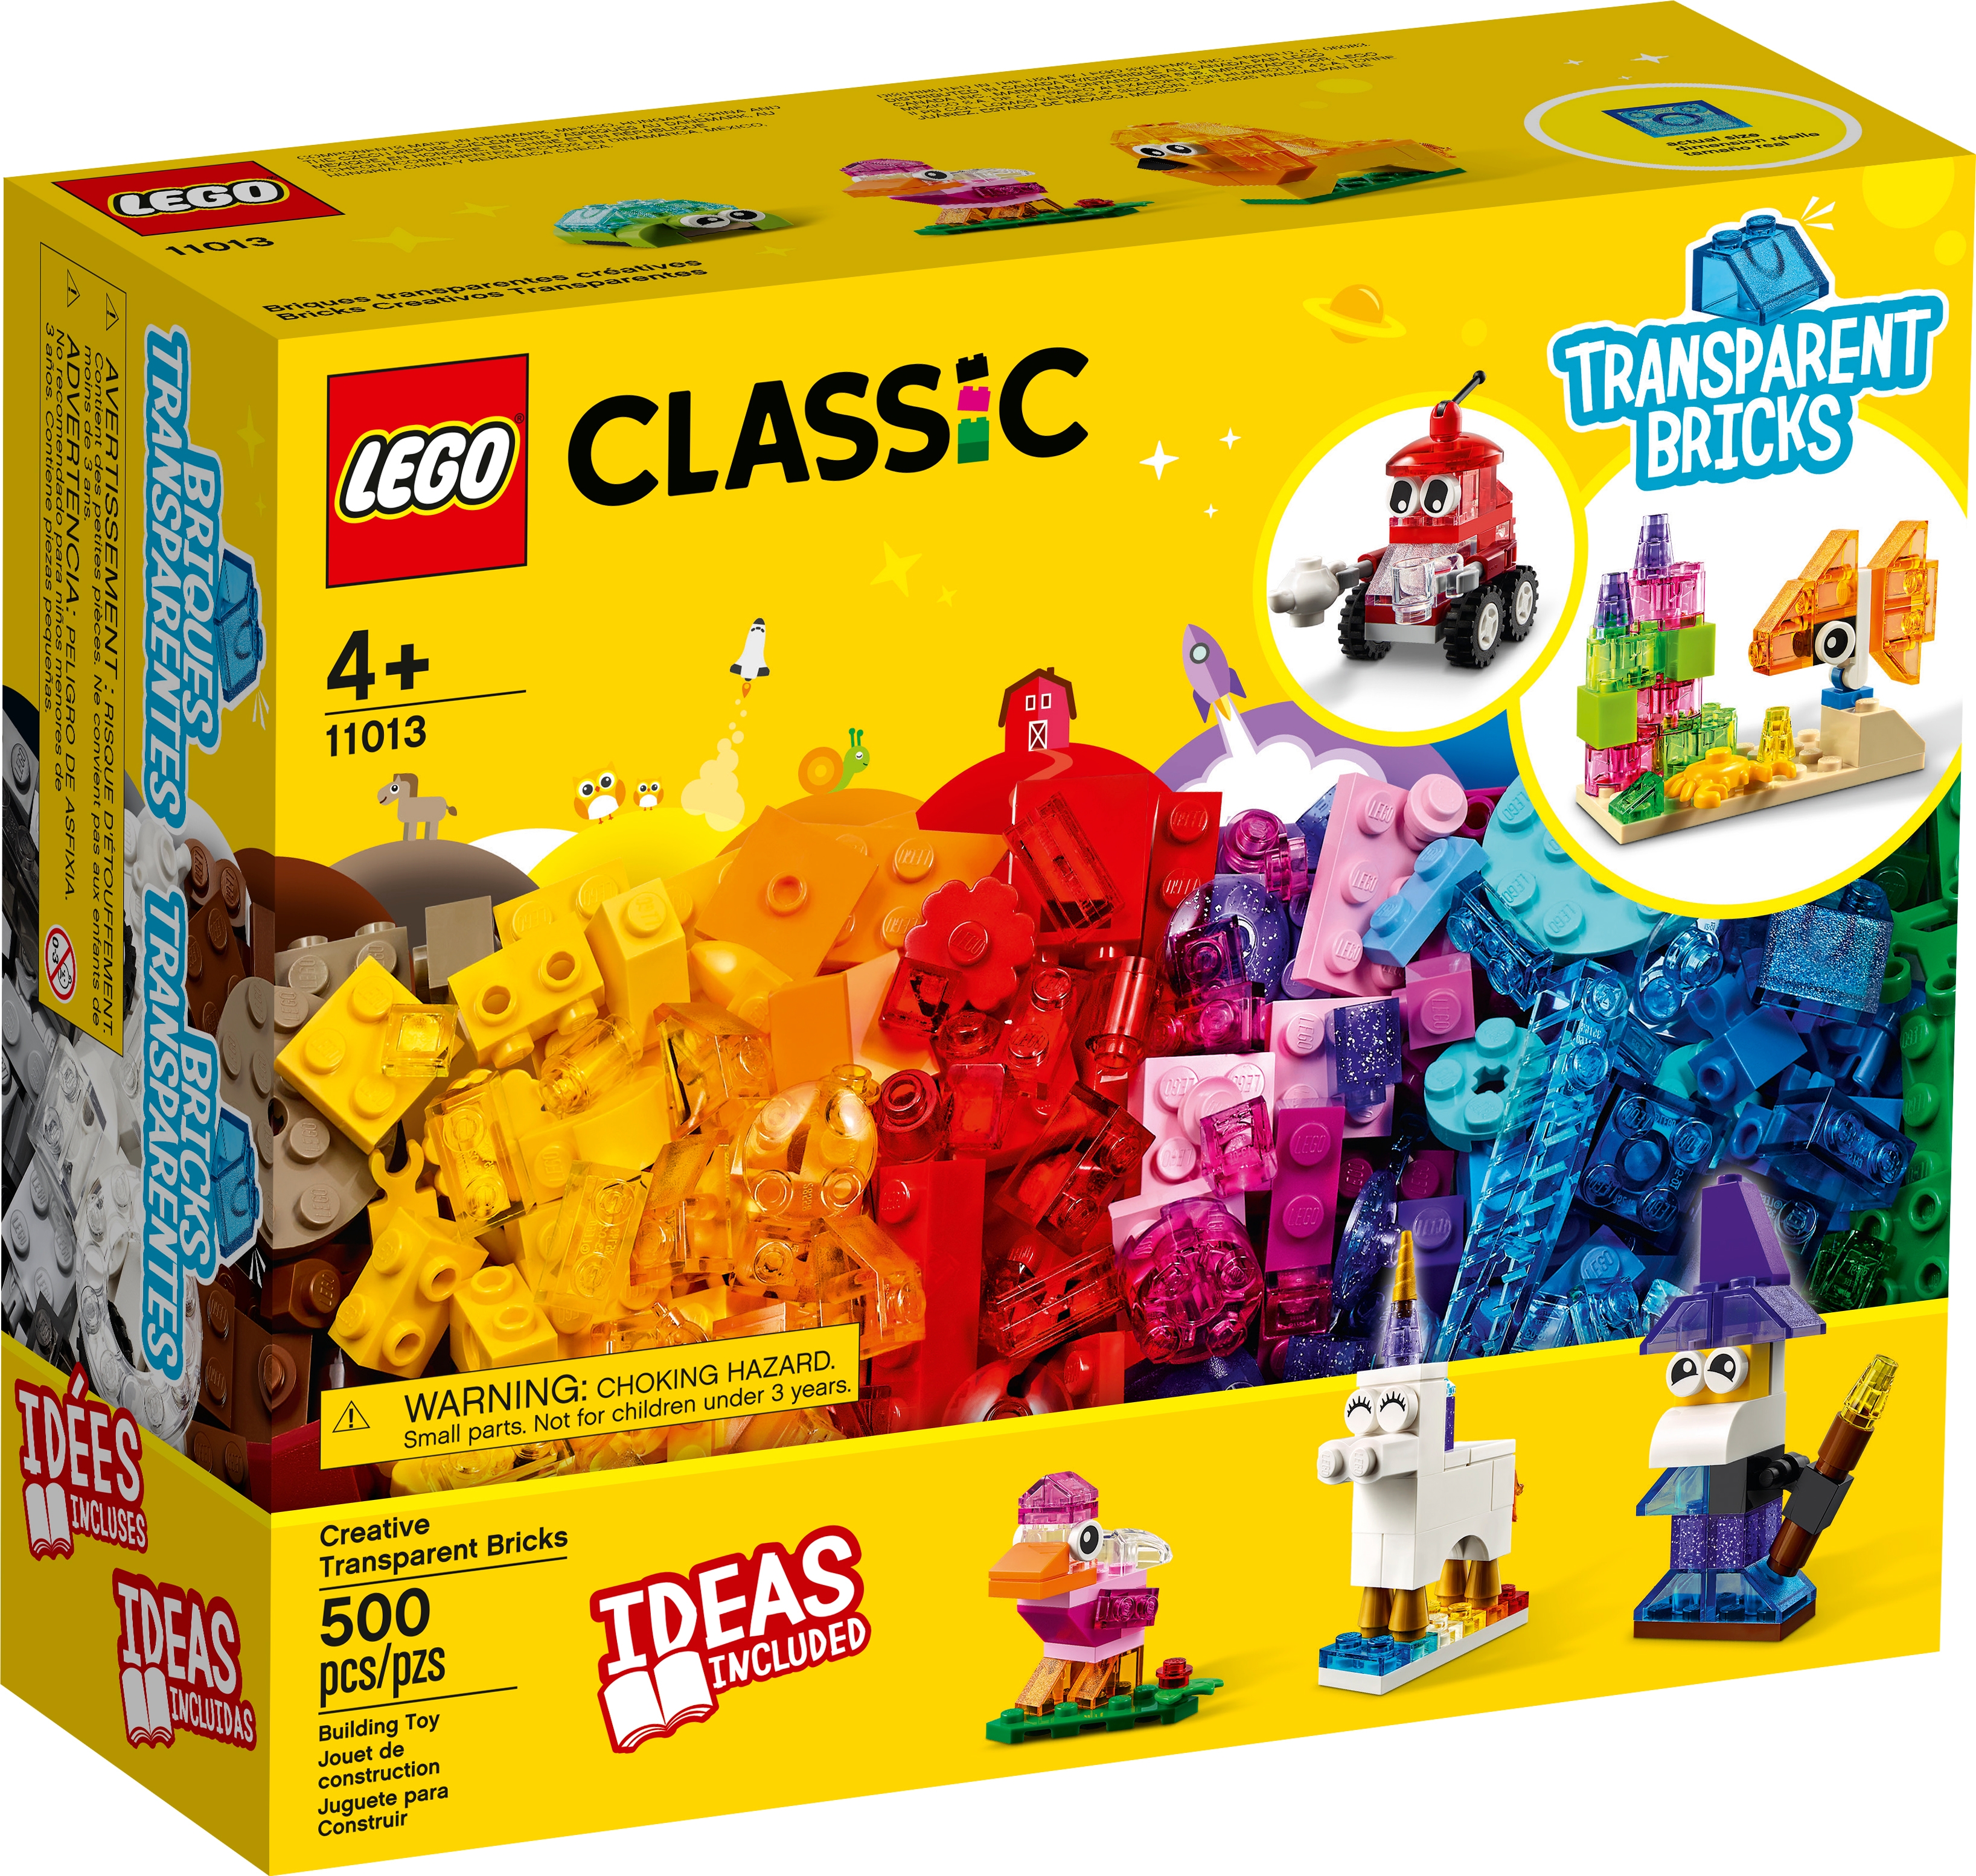 6x12x2 Clear Rectangle Translucent Canopy Bricks New Lego 1